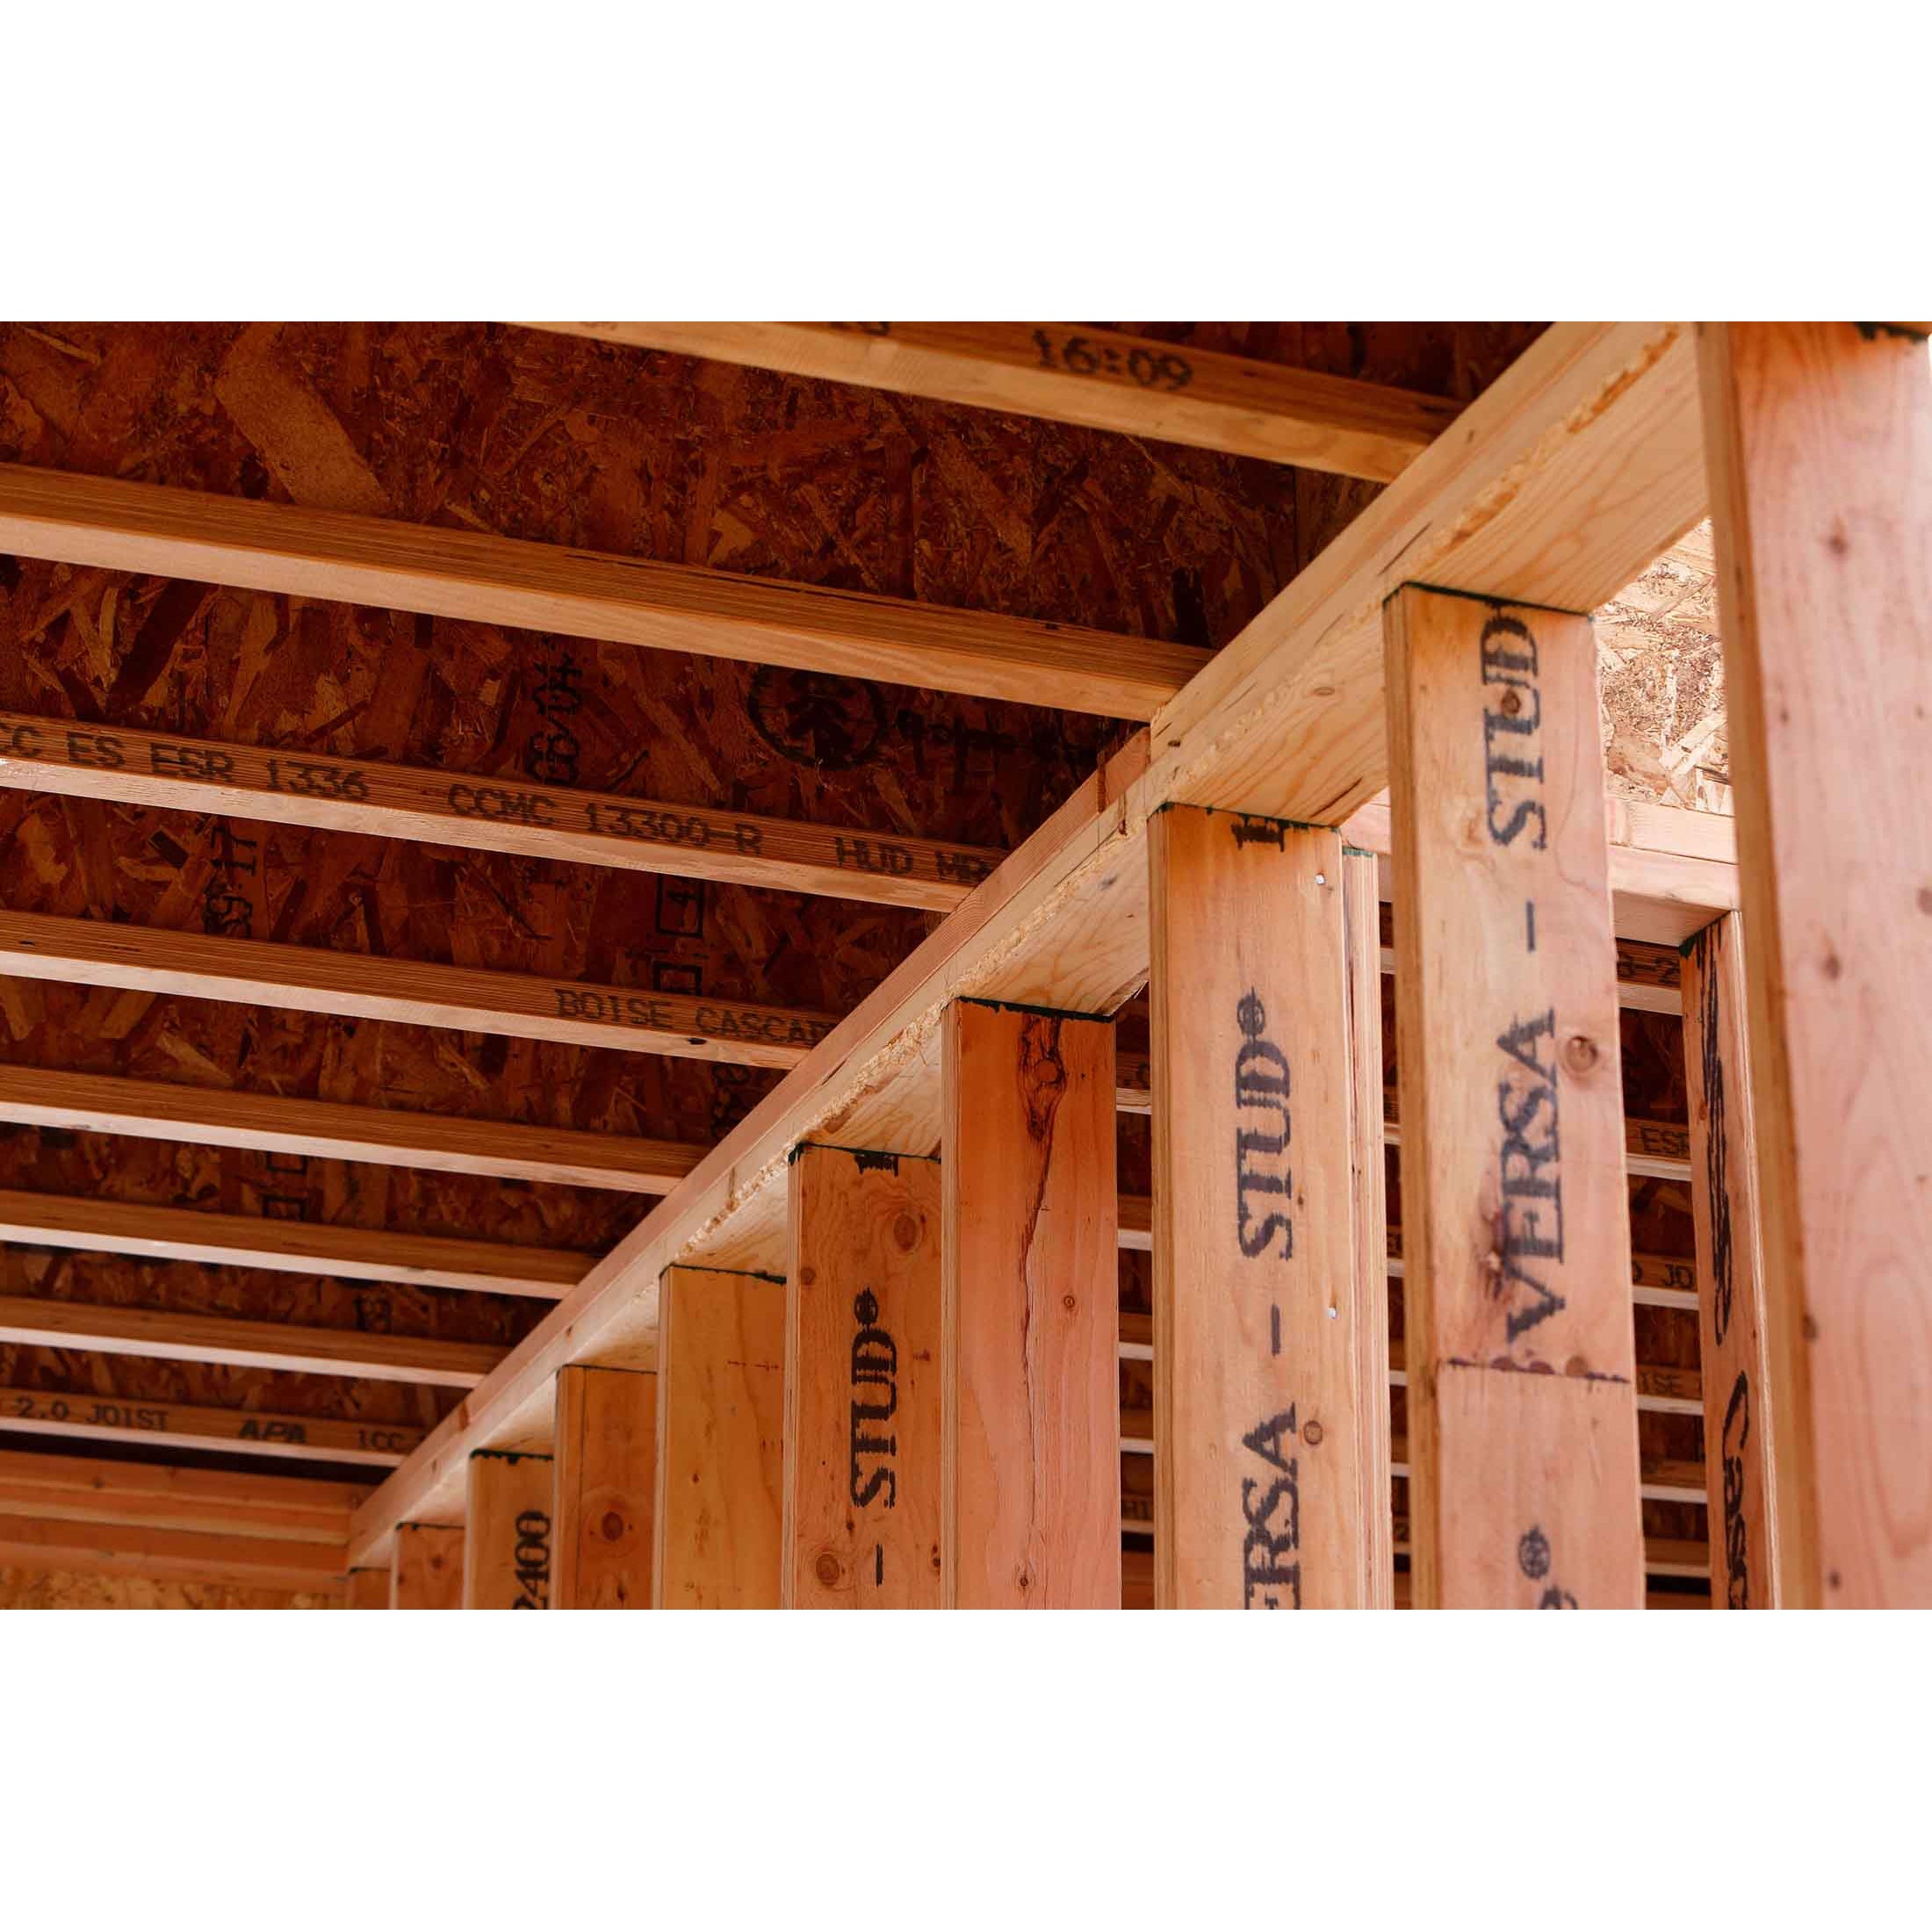 2” X 6” X 10’ TimberStrand Laminated Strand Lumber Pre-cut studs